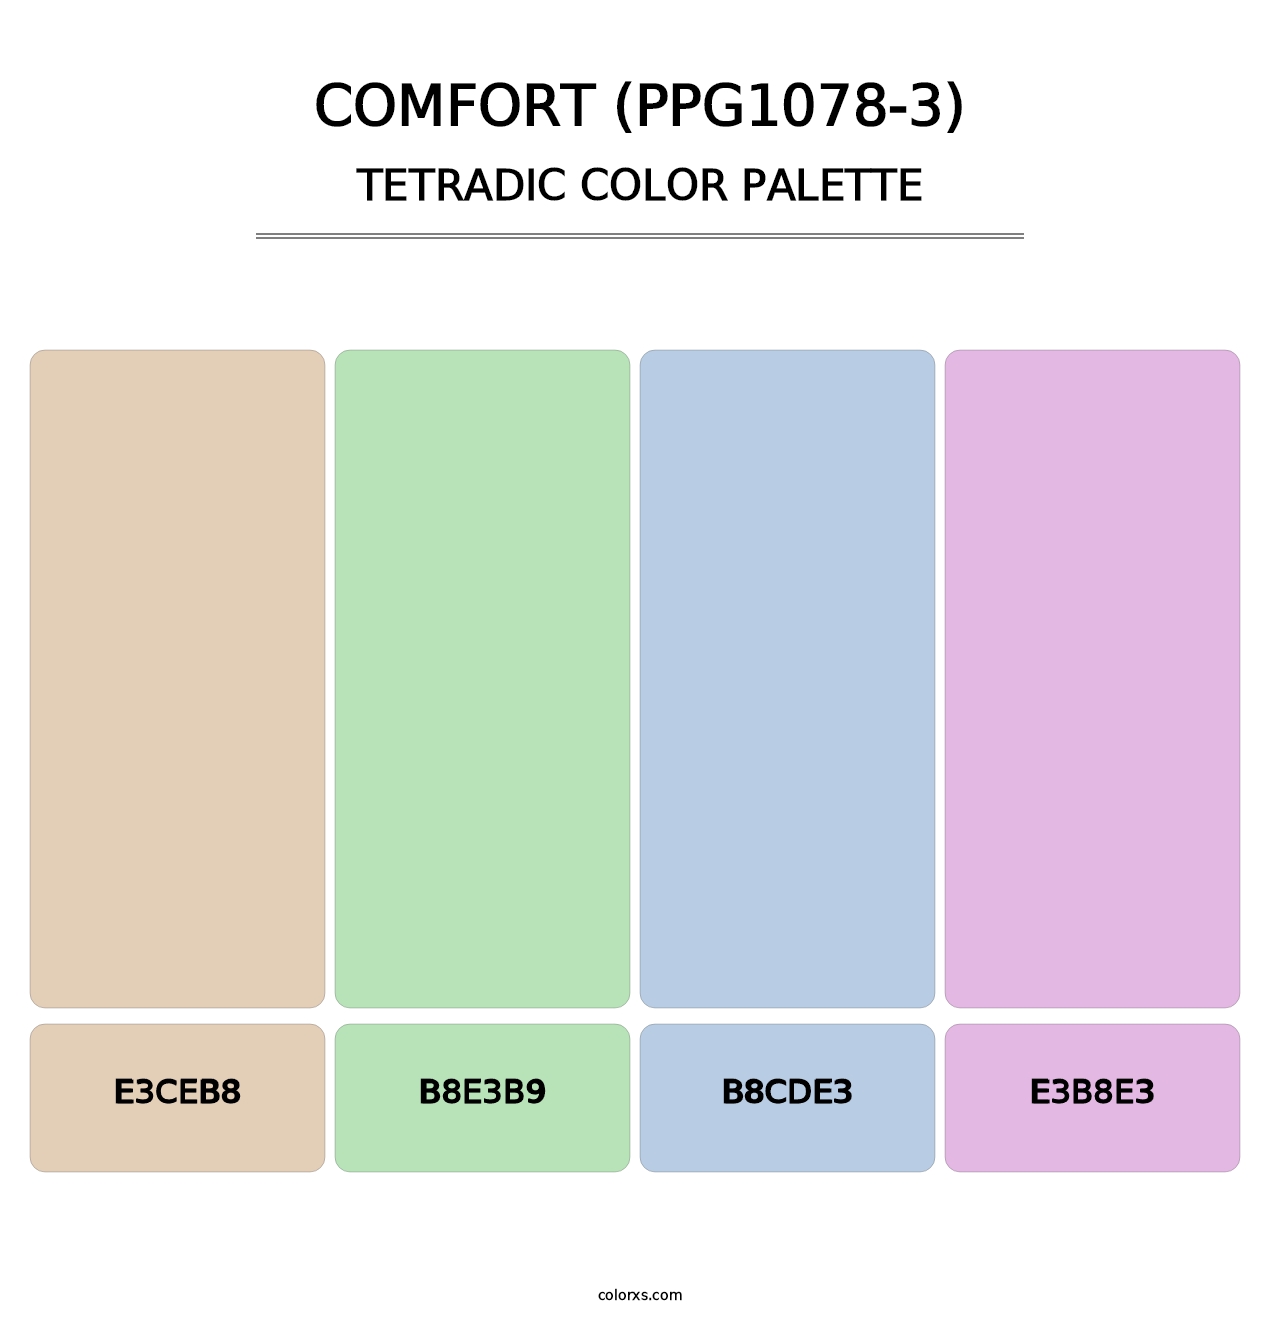 Comfort (PPG1078-3) - Tetradic Color Palette